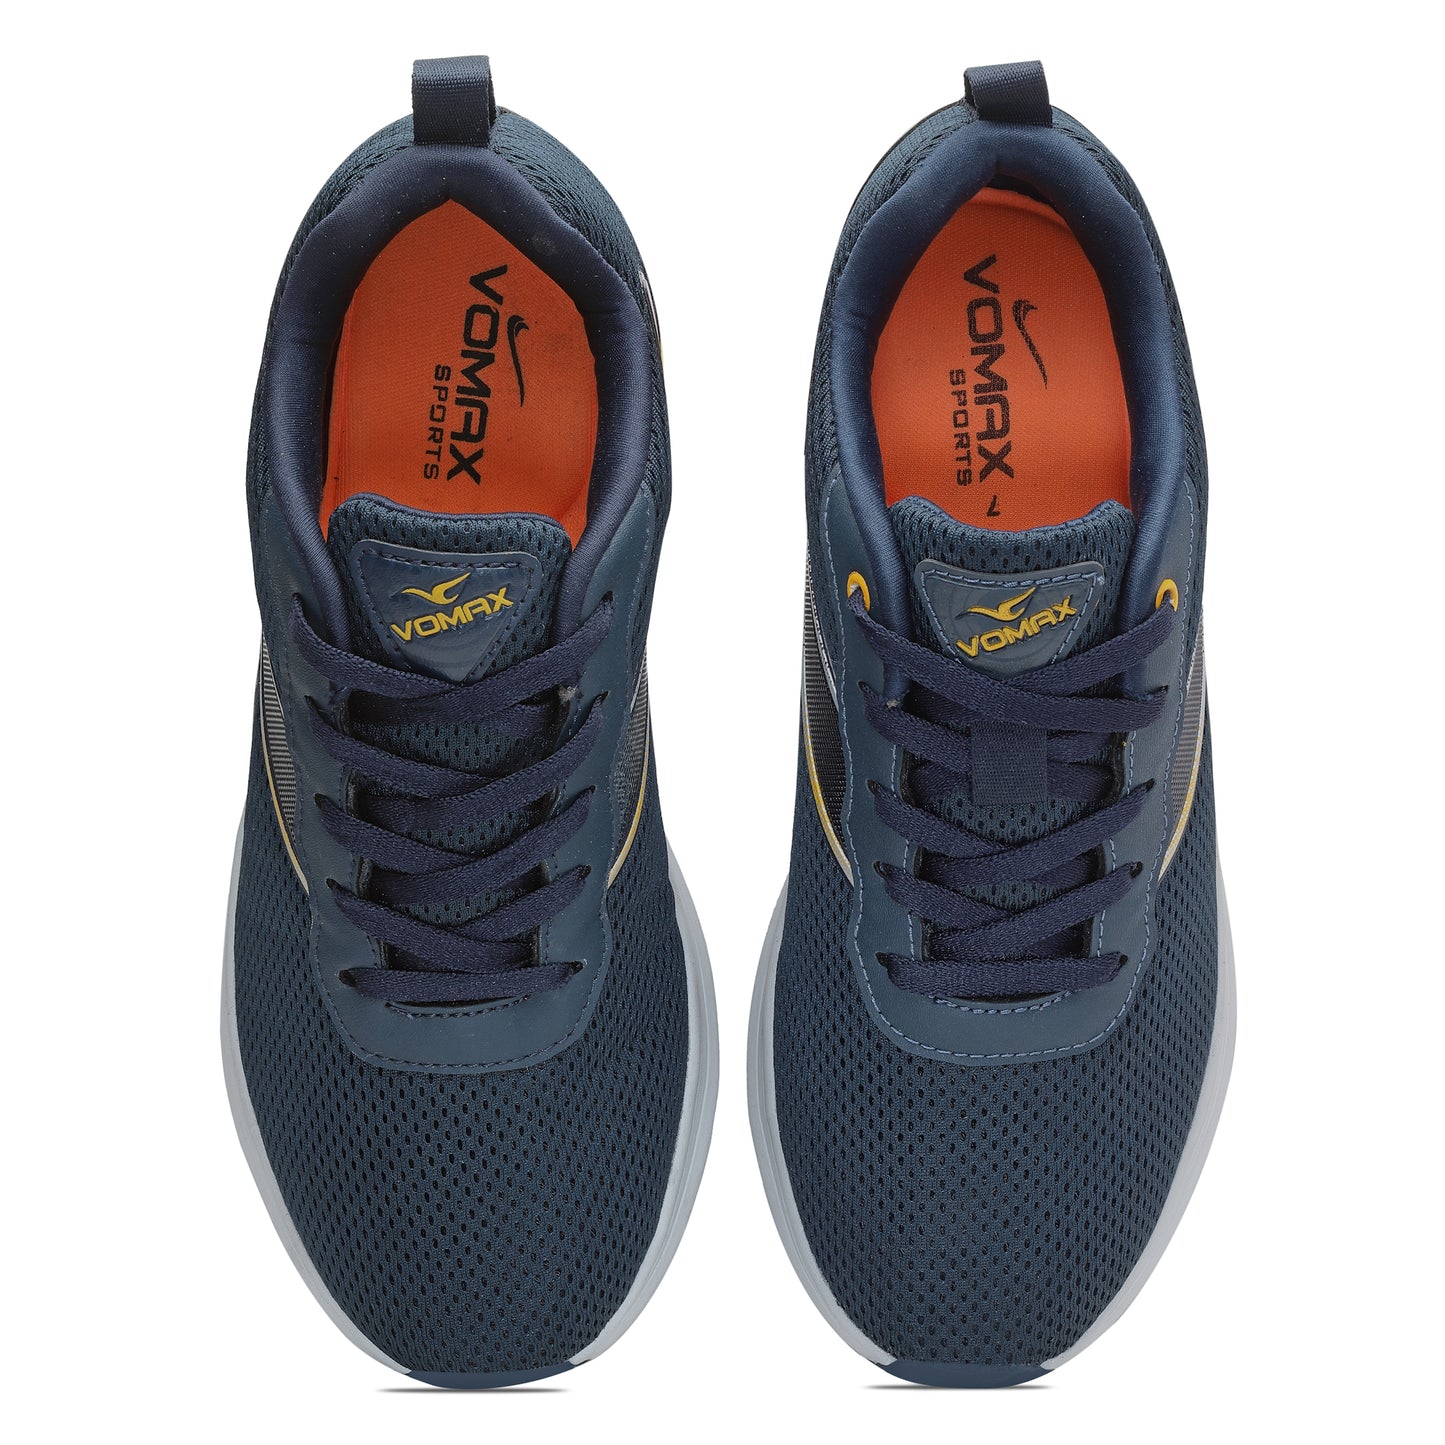 Vomax Sports Farley-02 Men's Swift Running & Training Shoes Breathable Upper Mesh